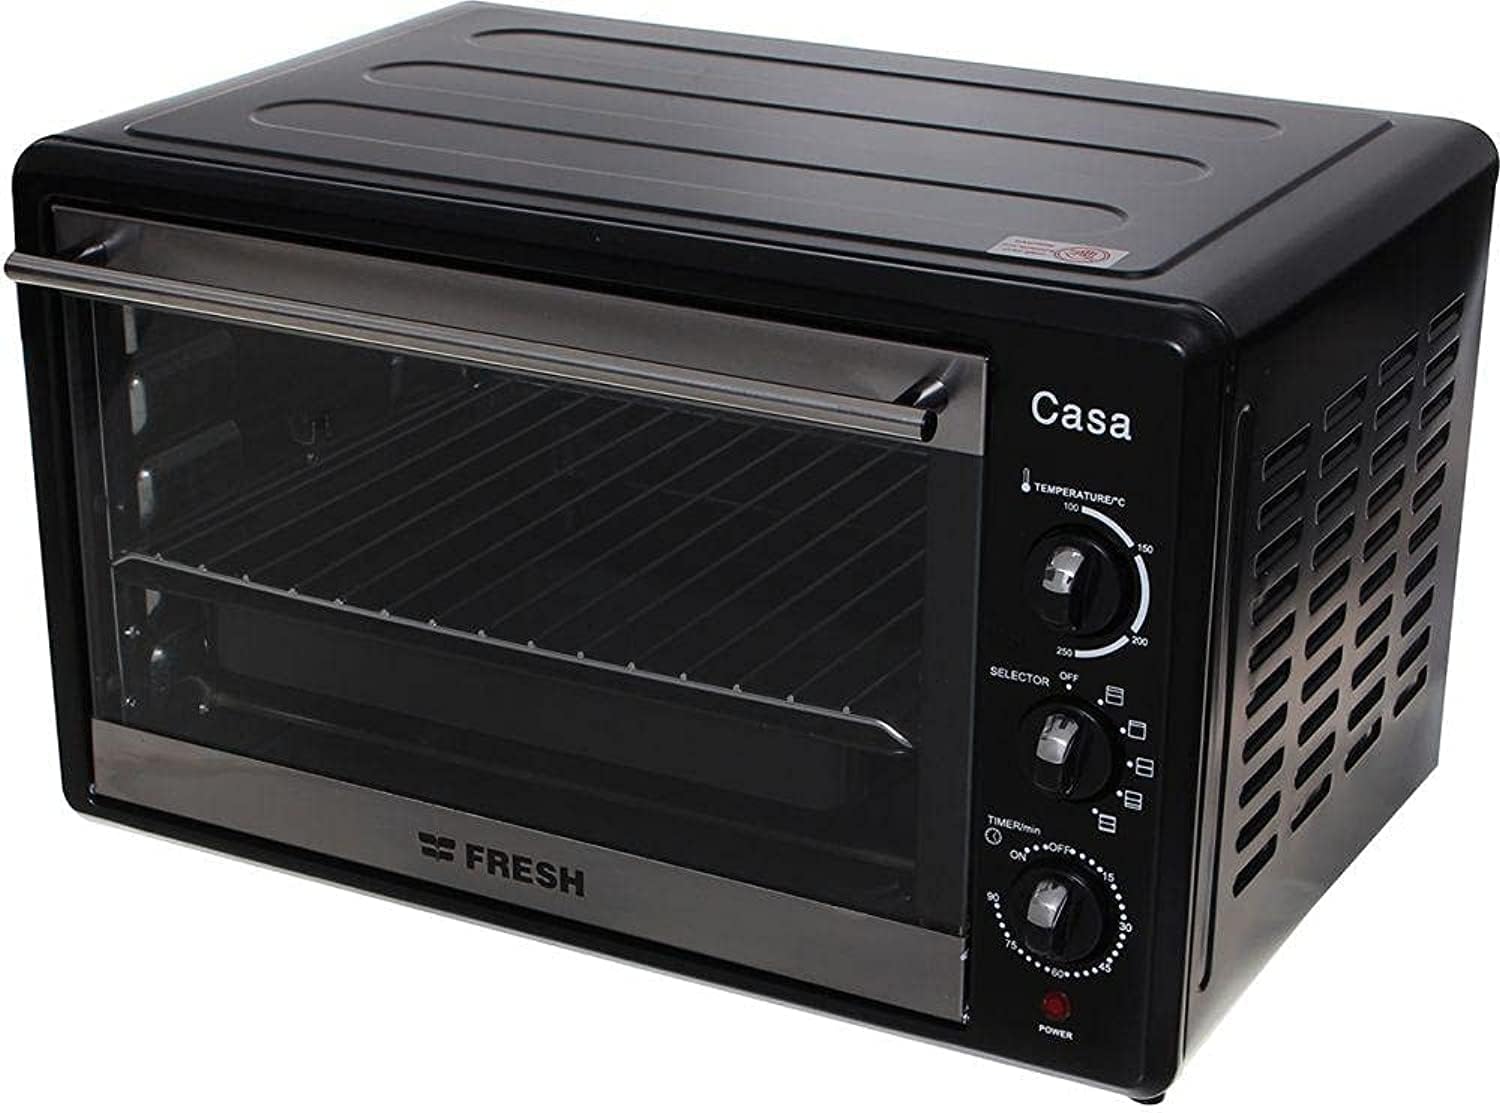 Fresh Casa Electric Oven with Grill, 45 Liters, 2000 Watt, Black - FR-4503R